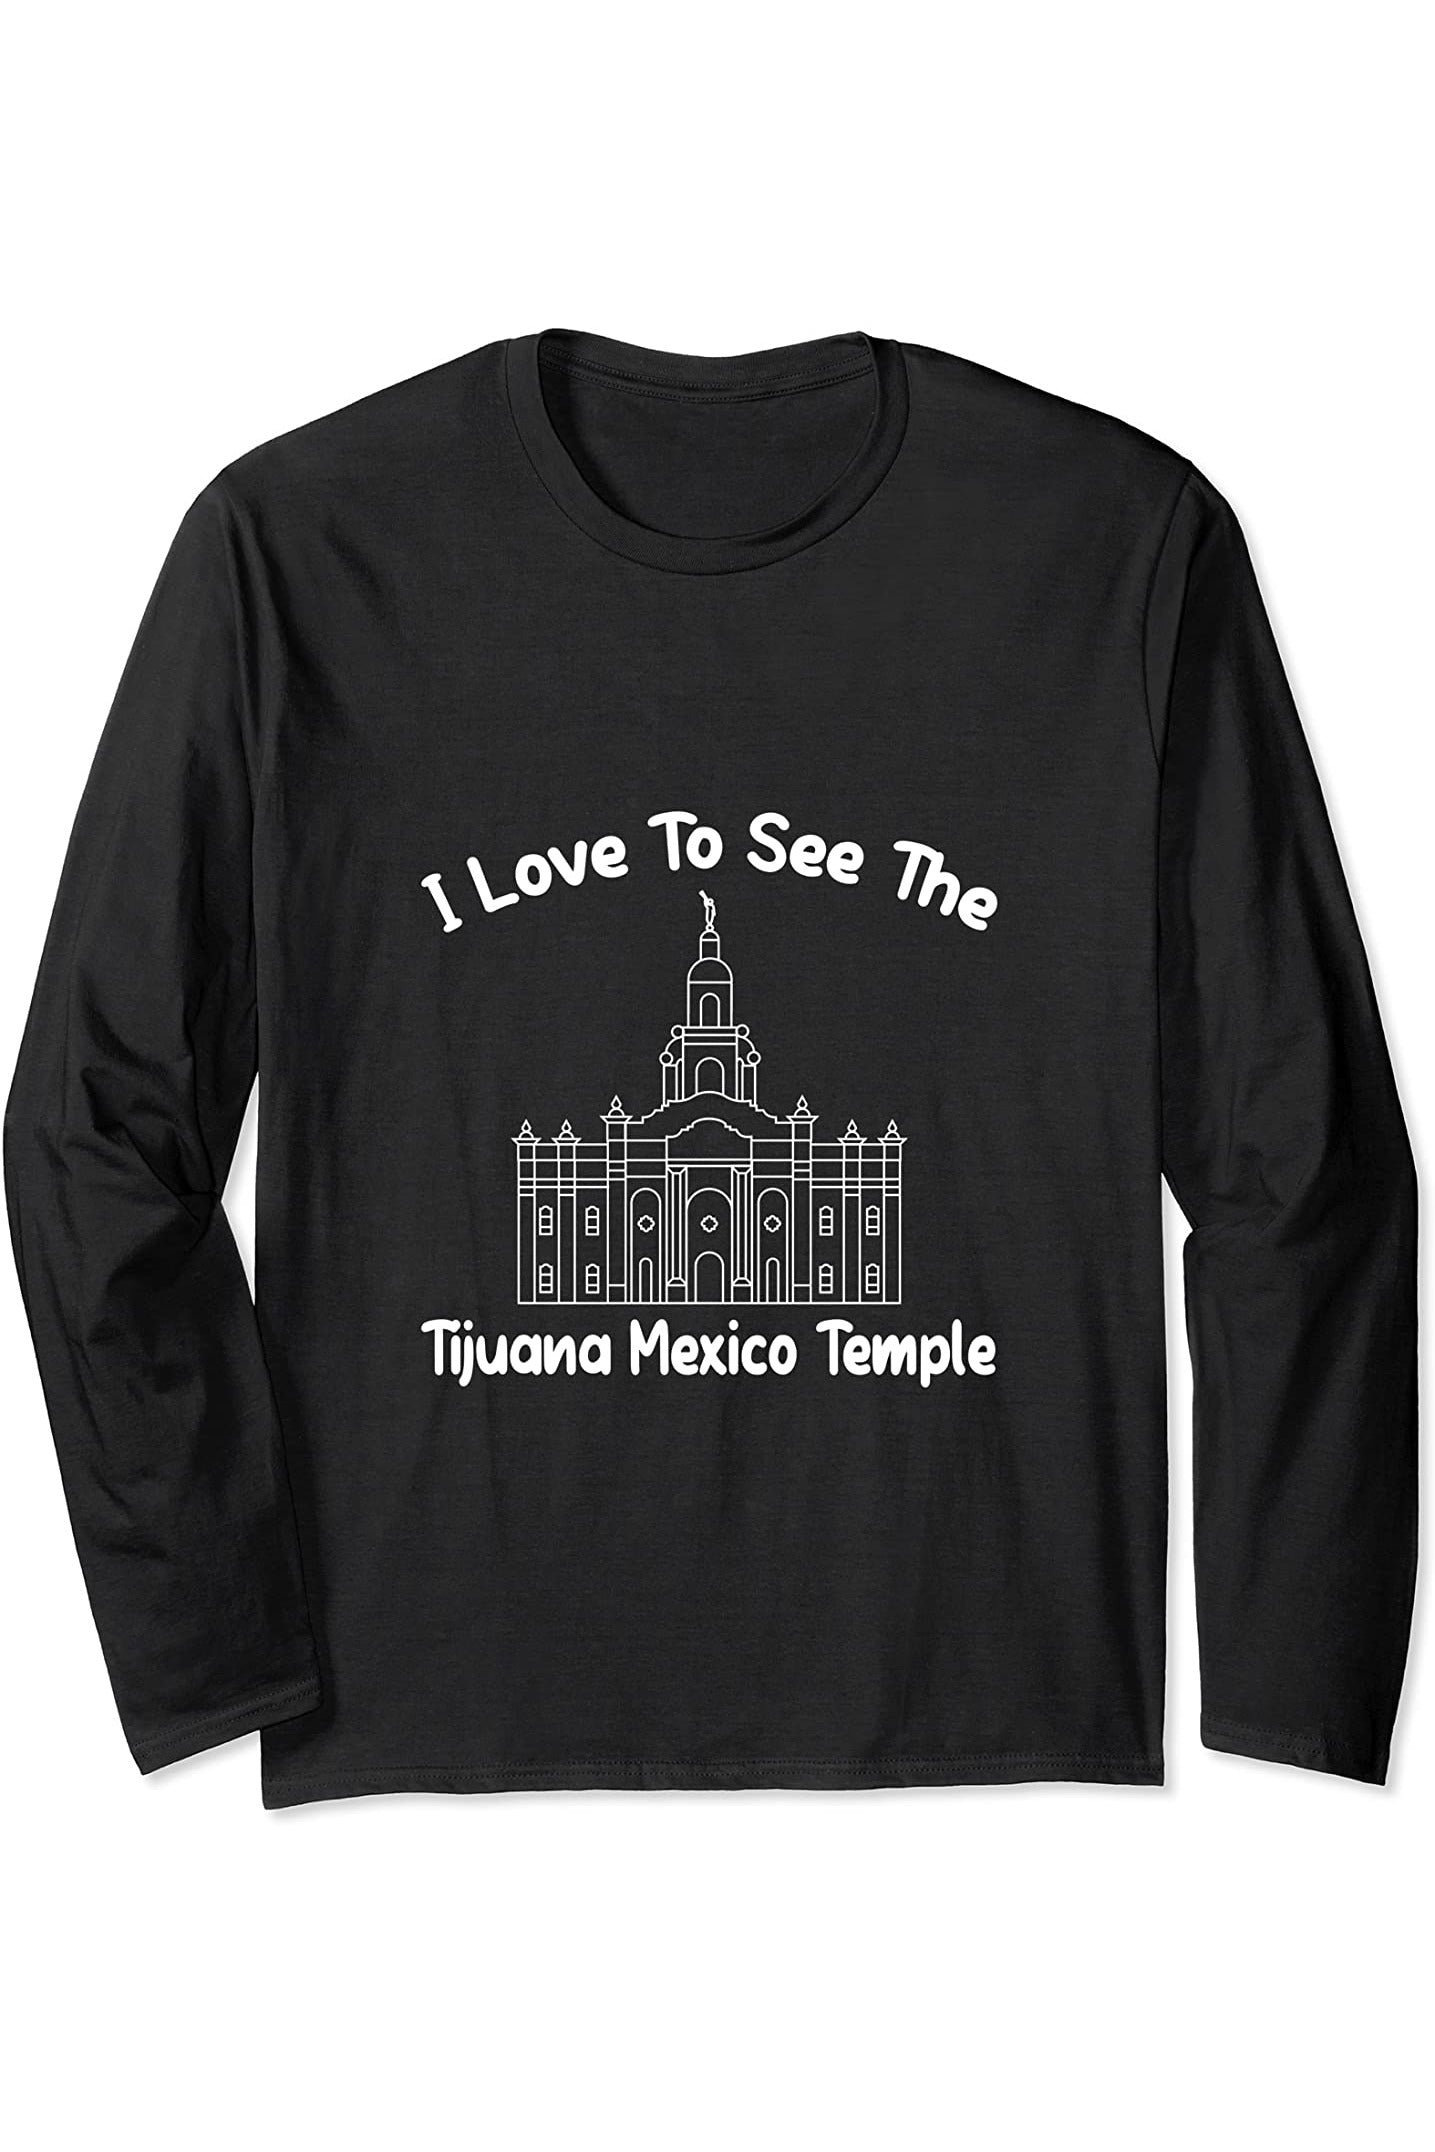 Tijuana Mexico Temple Long Sleeve T-Shirt - Primary Style (English) US